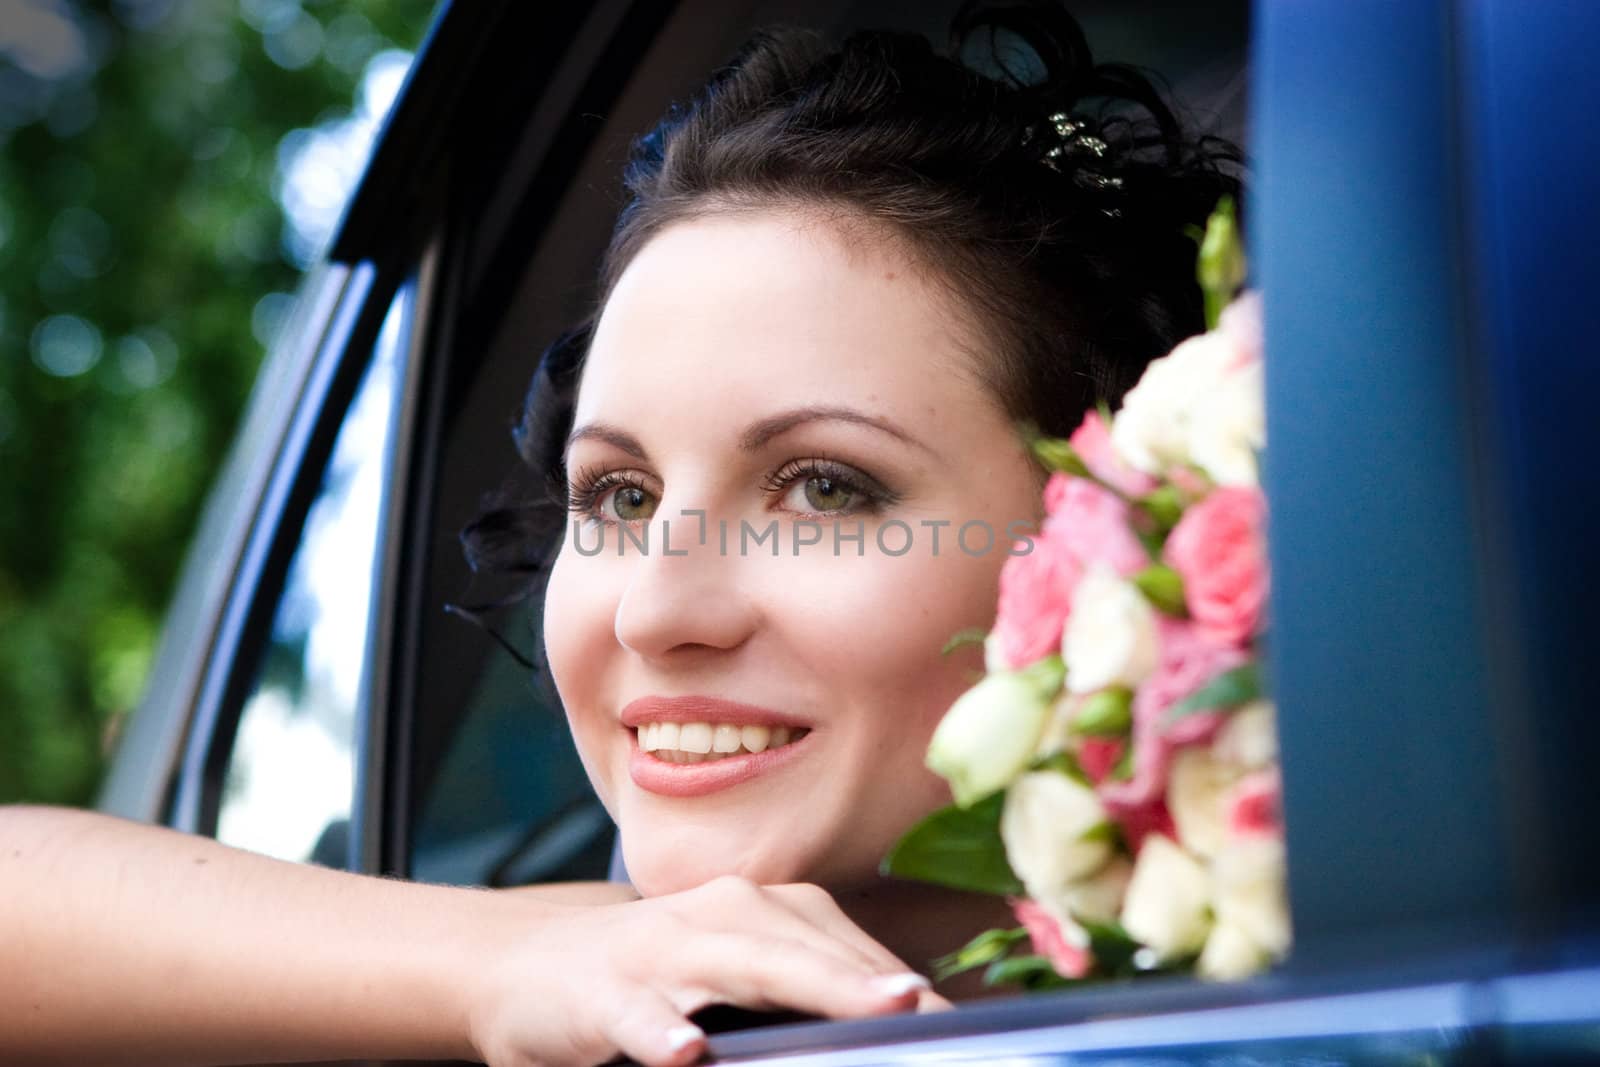 beauty in the wedding car by vsurkov